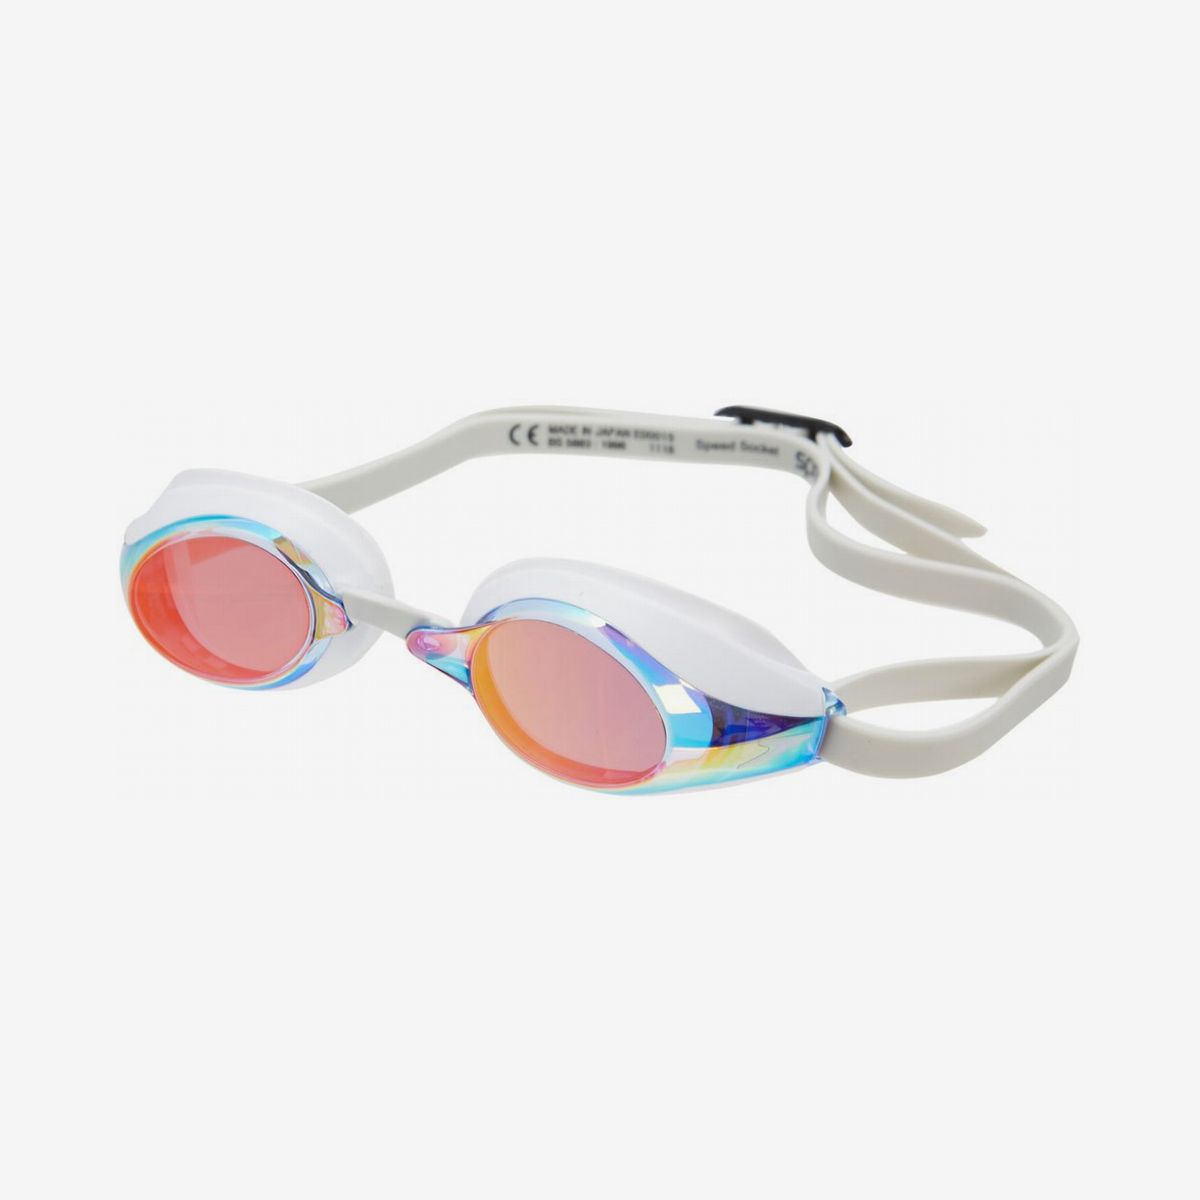 ohrss 5 Best Adult Anti-fog UV Swimming Glasses Adjustable Nose Clip 